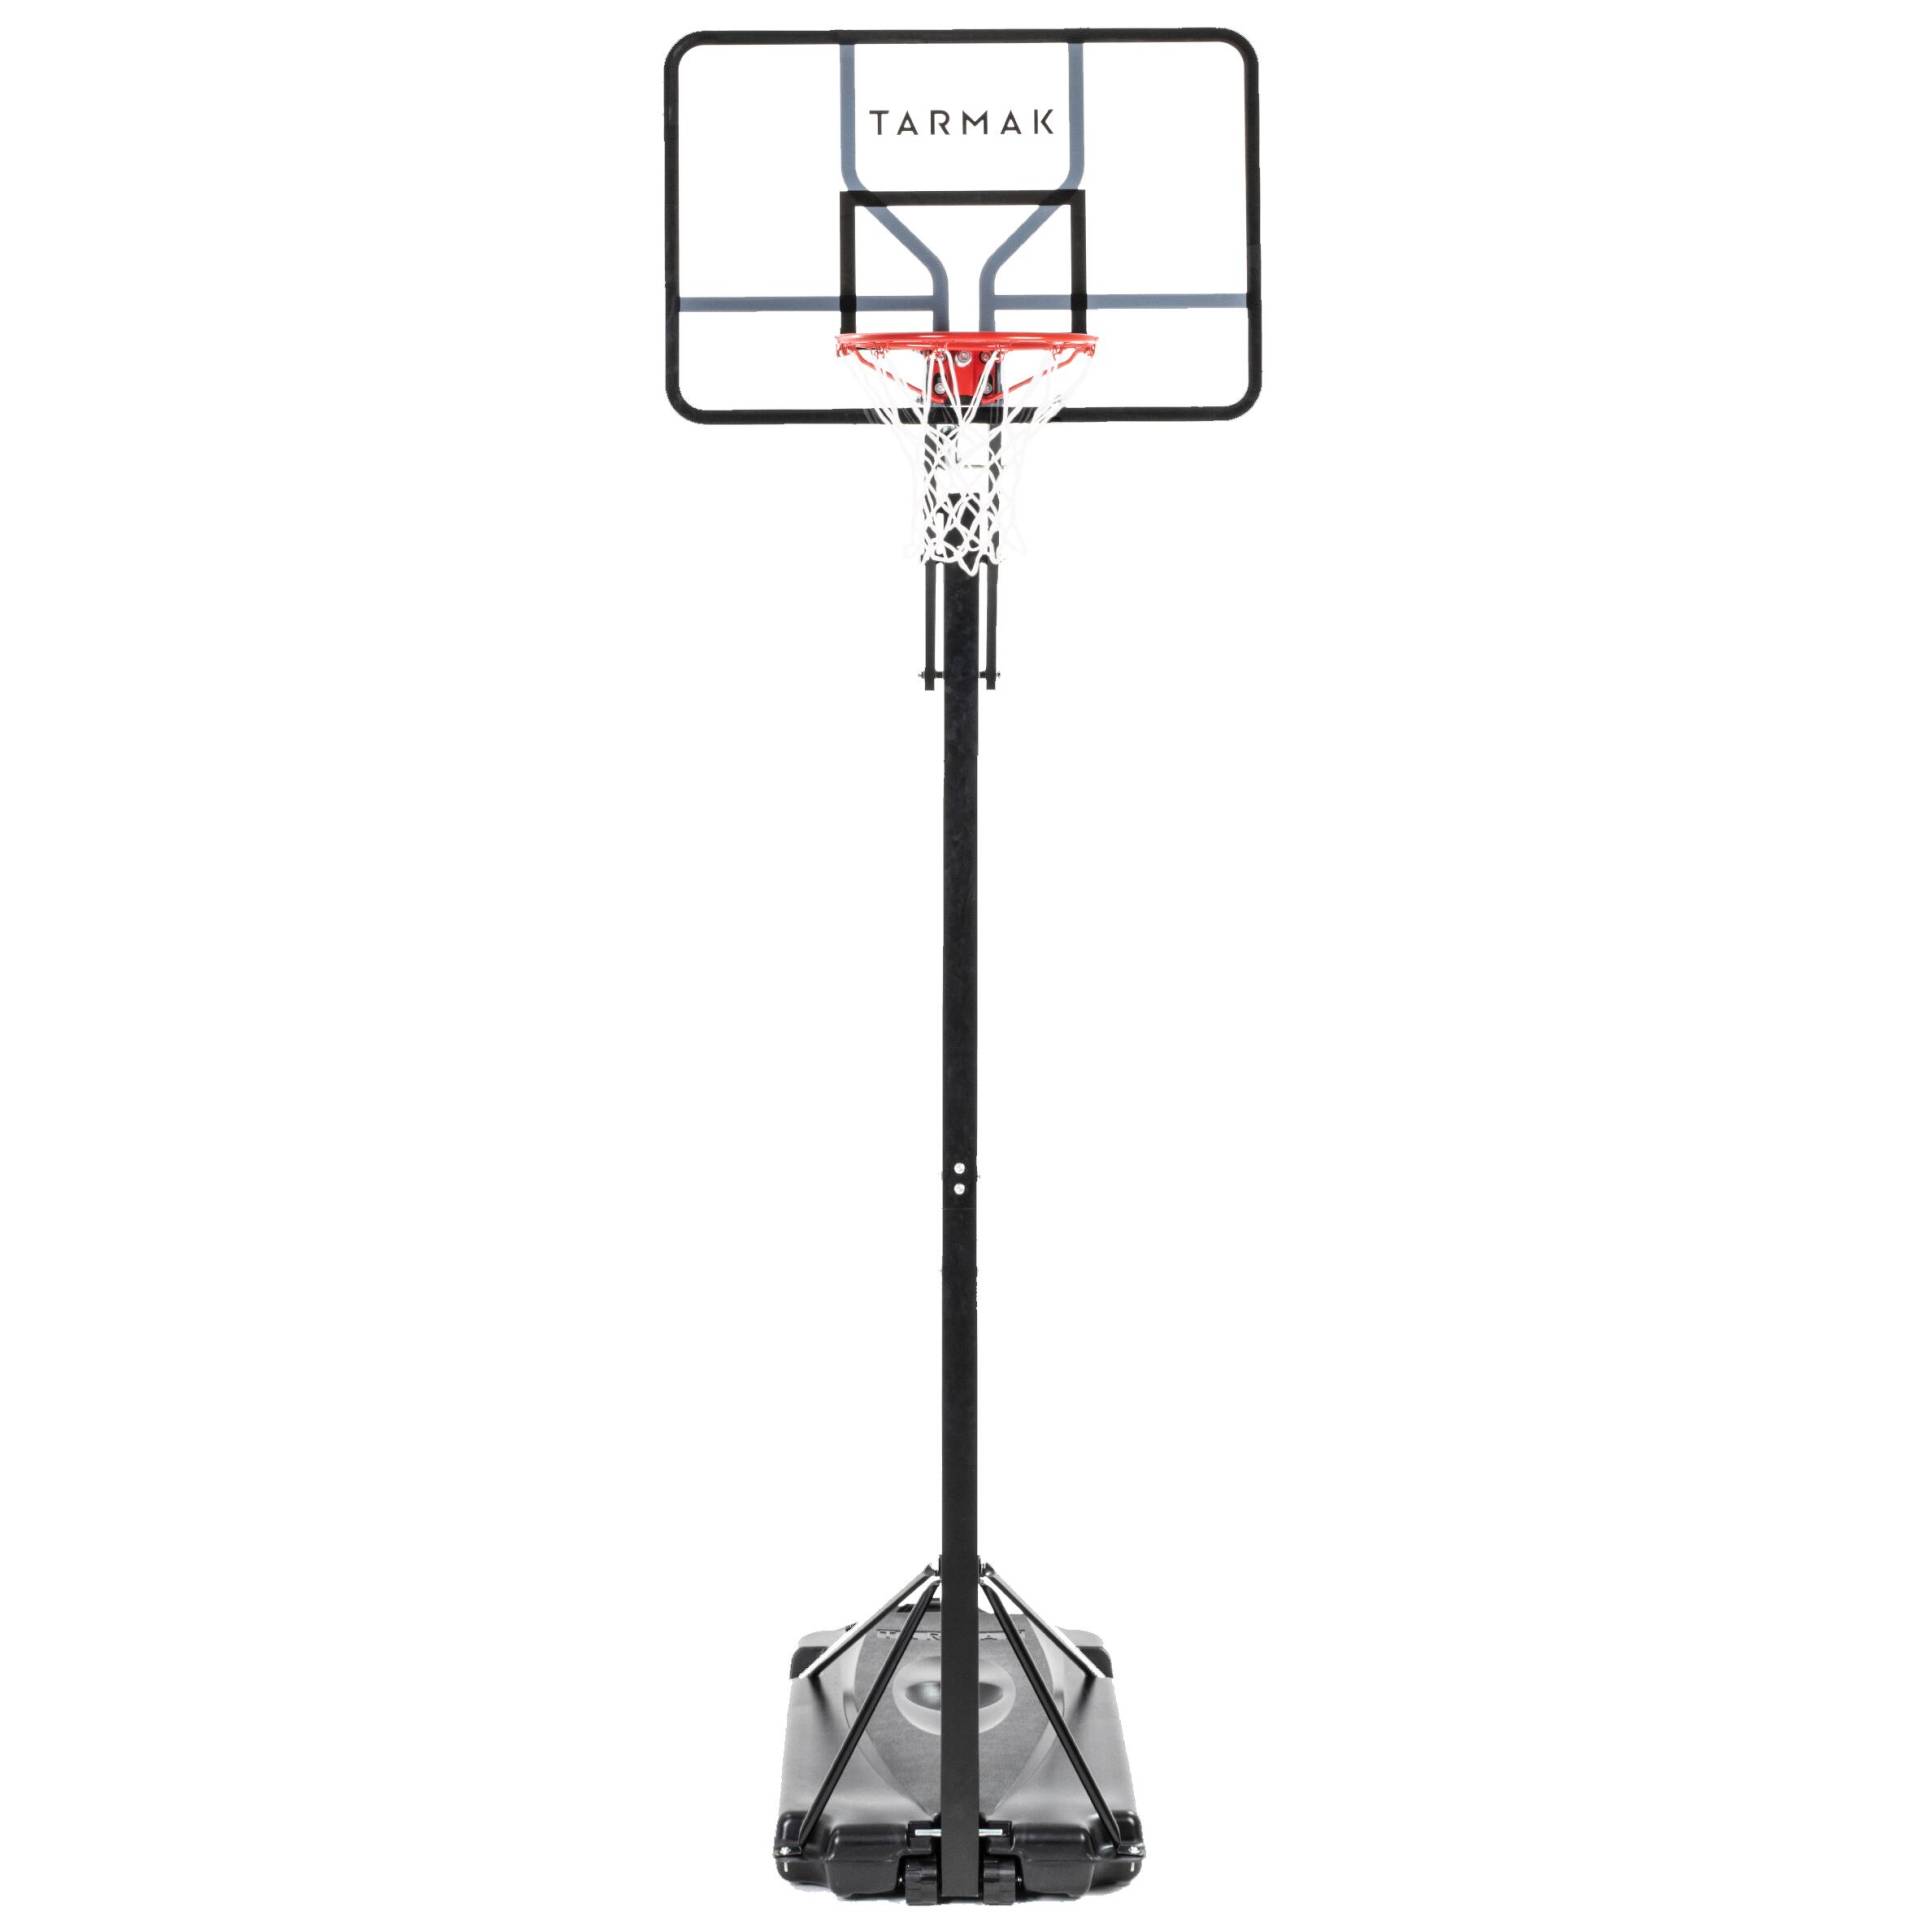 Basketball Korbanlage höhenverstellbar 2,40 – 3,05 m - B700 PRO von TARMAK